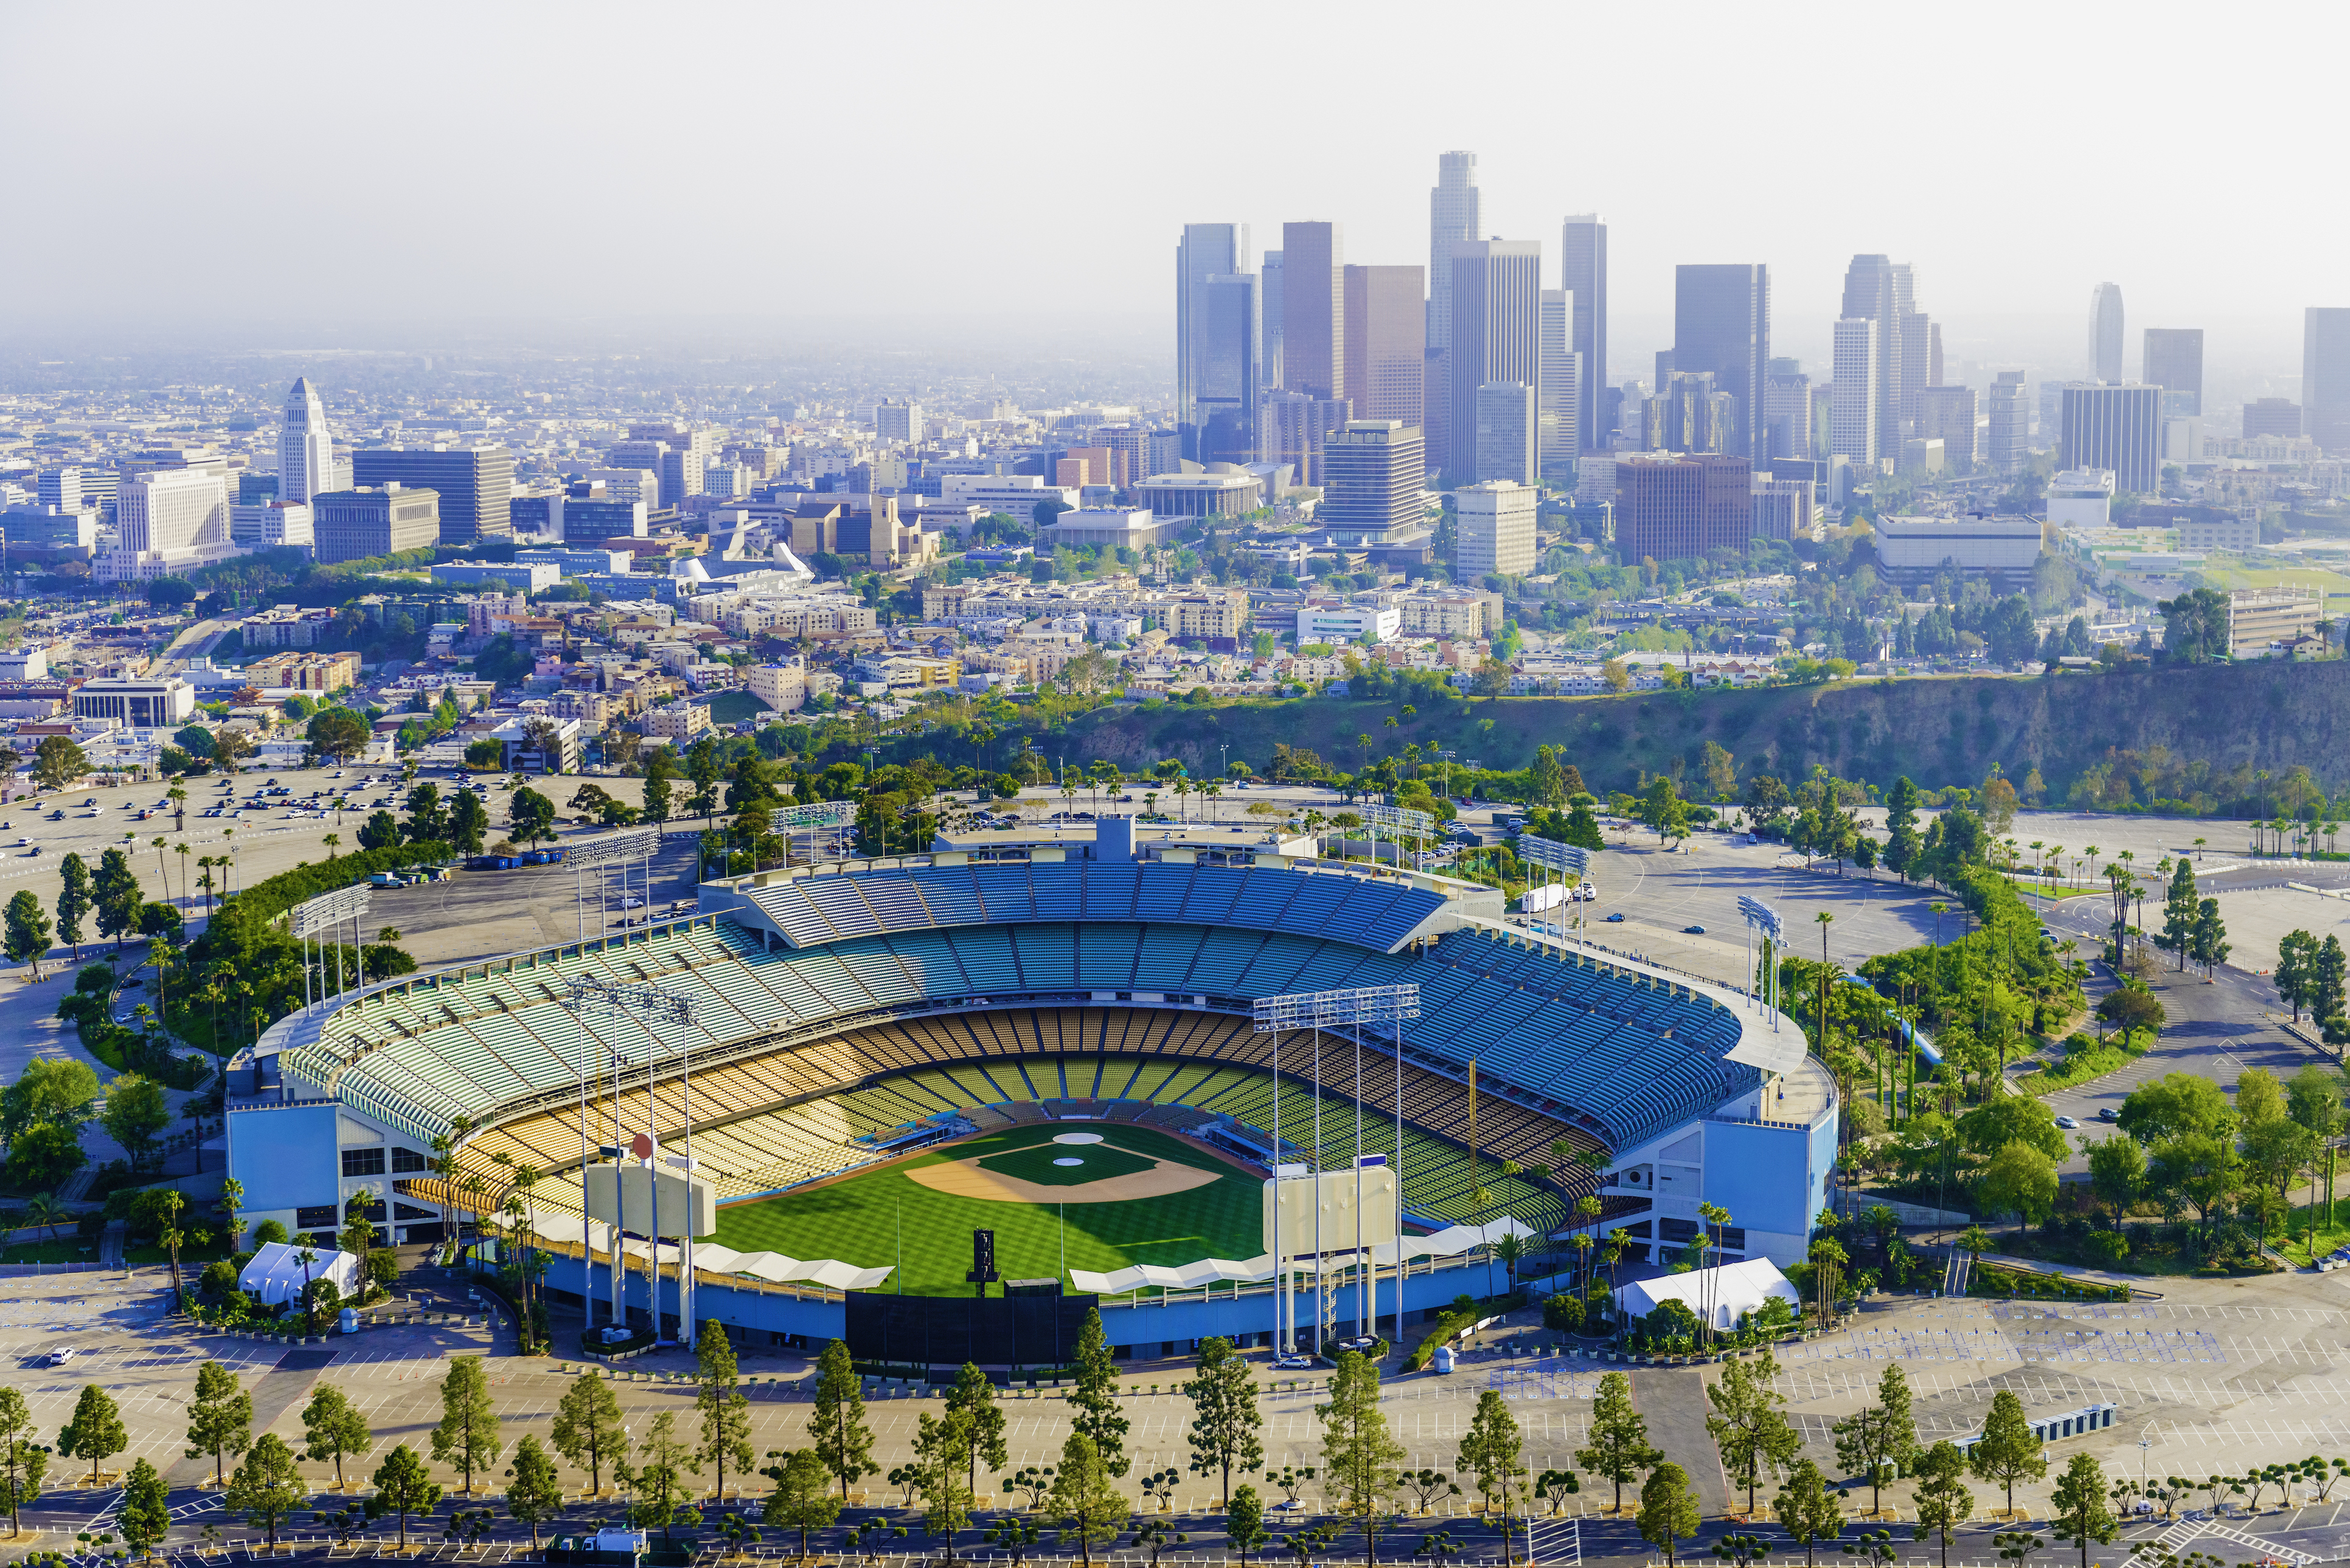 Better Baseball City: LA or San Diego? - Stadium